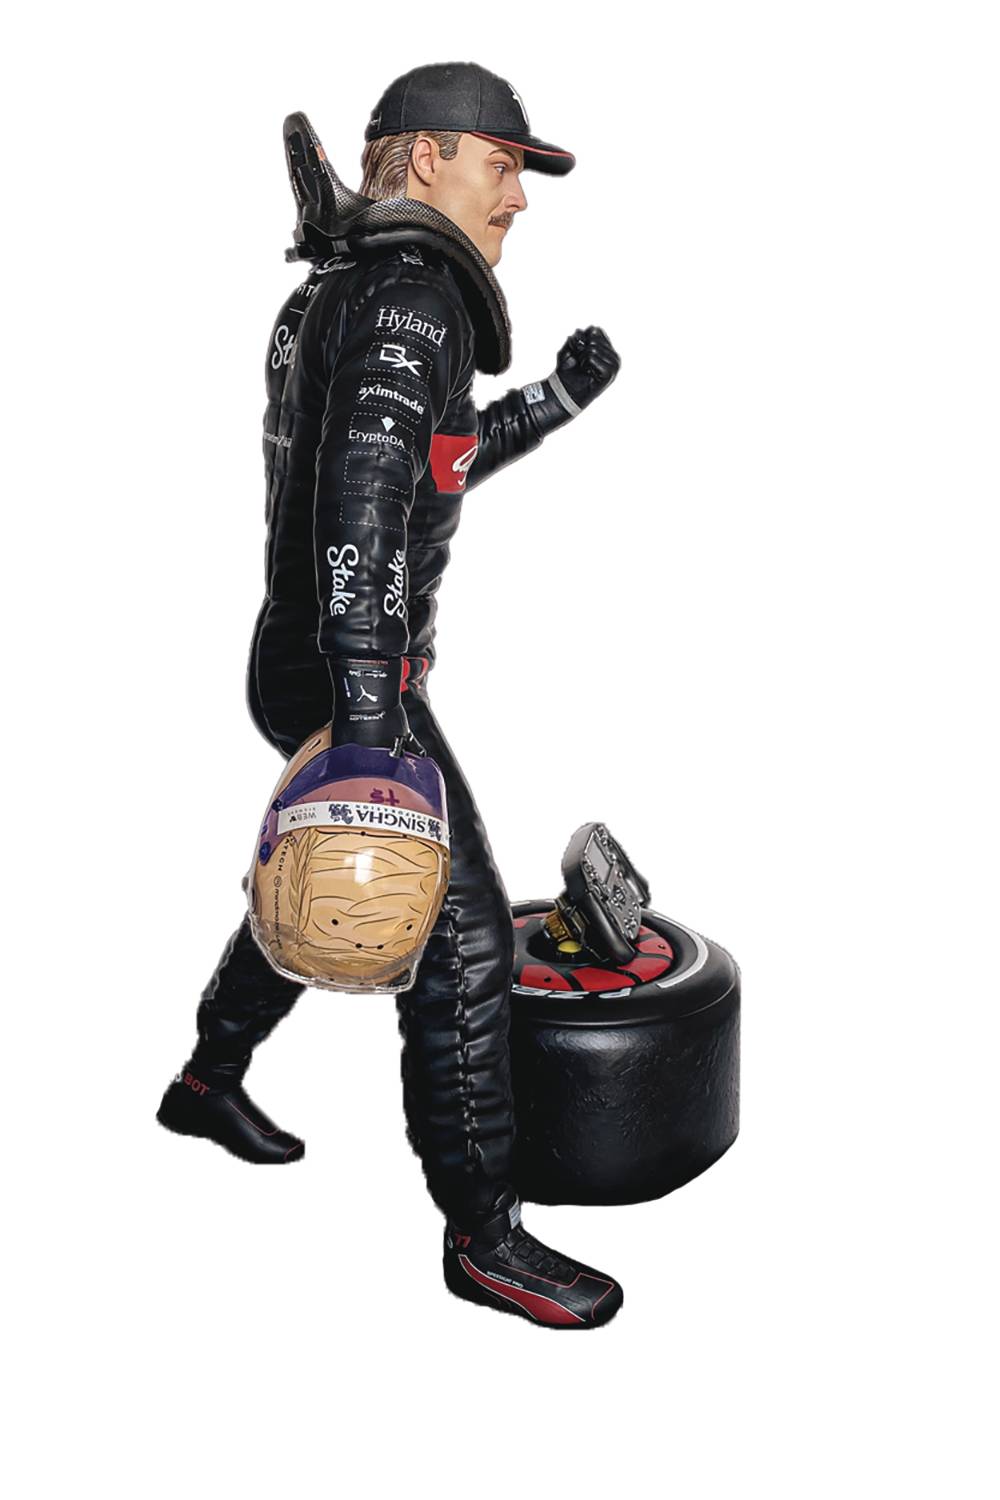 Star ace toys F1 Driver Valtteri Bottas 1/4 Statue